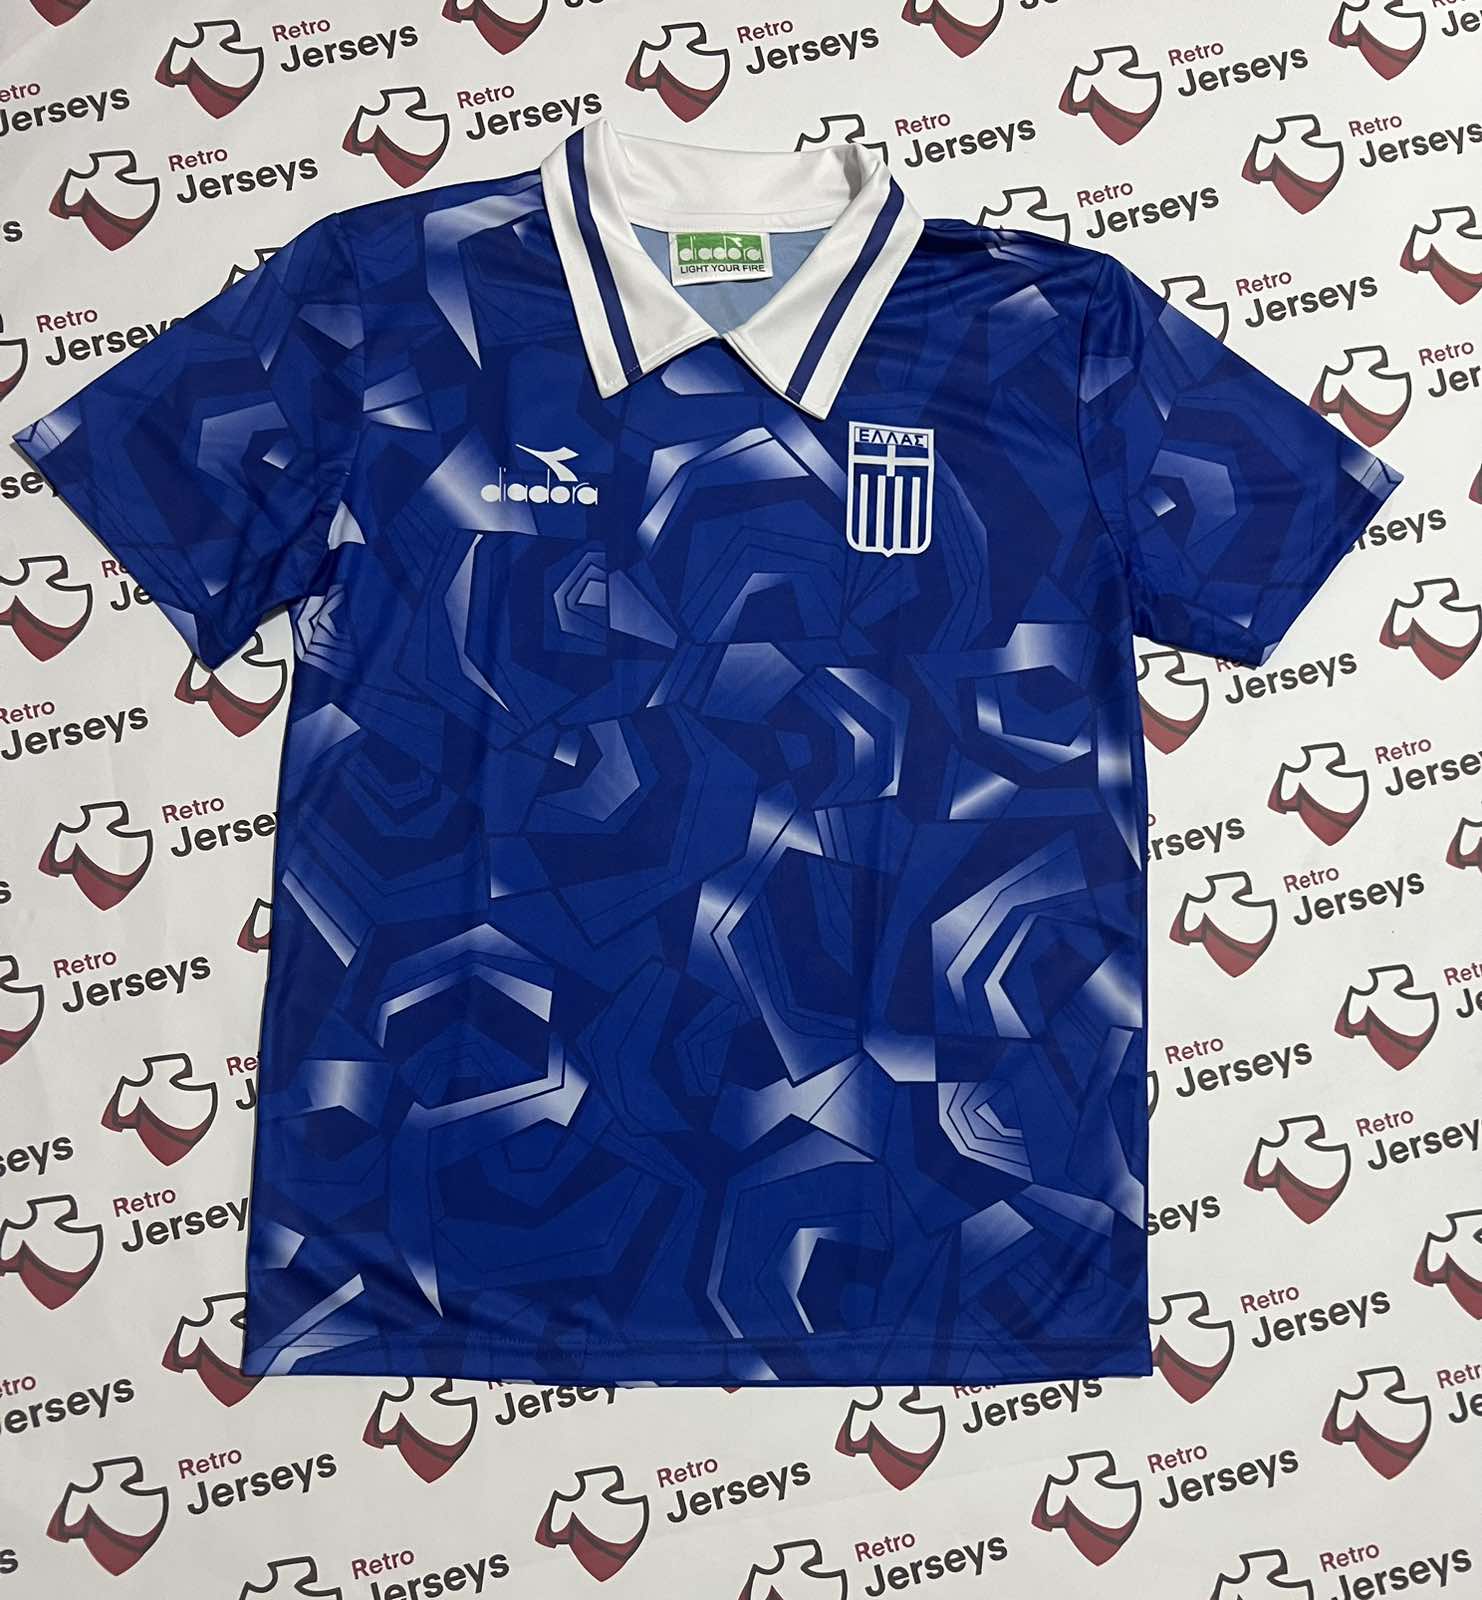 Greece National Shirt 1993-1994 Home - Retro Jerseys, φανέλα Γρεεκε - Retro Jerseys